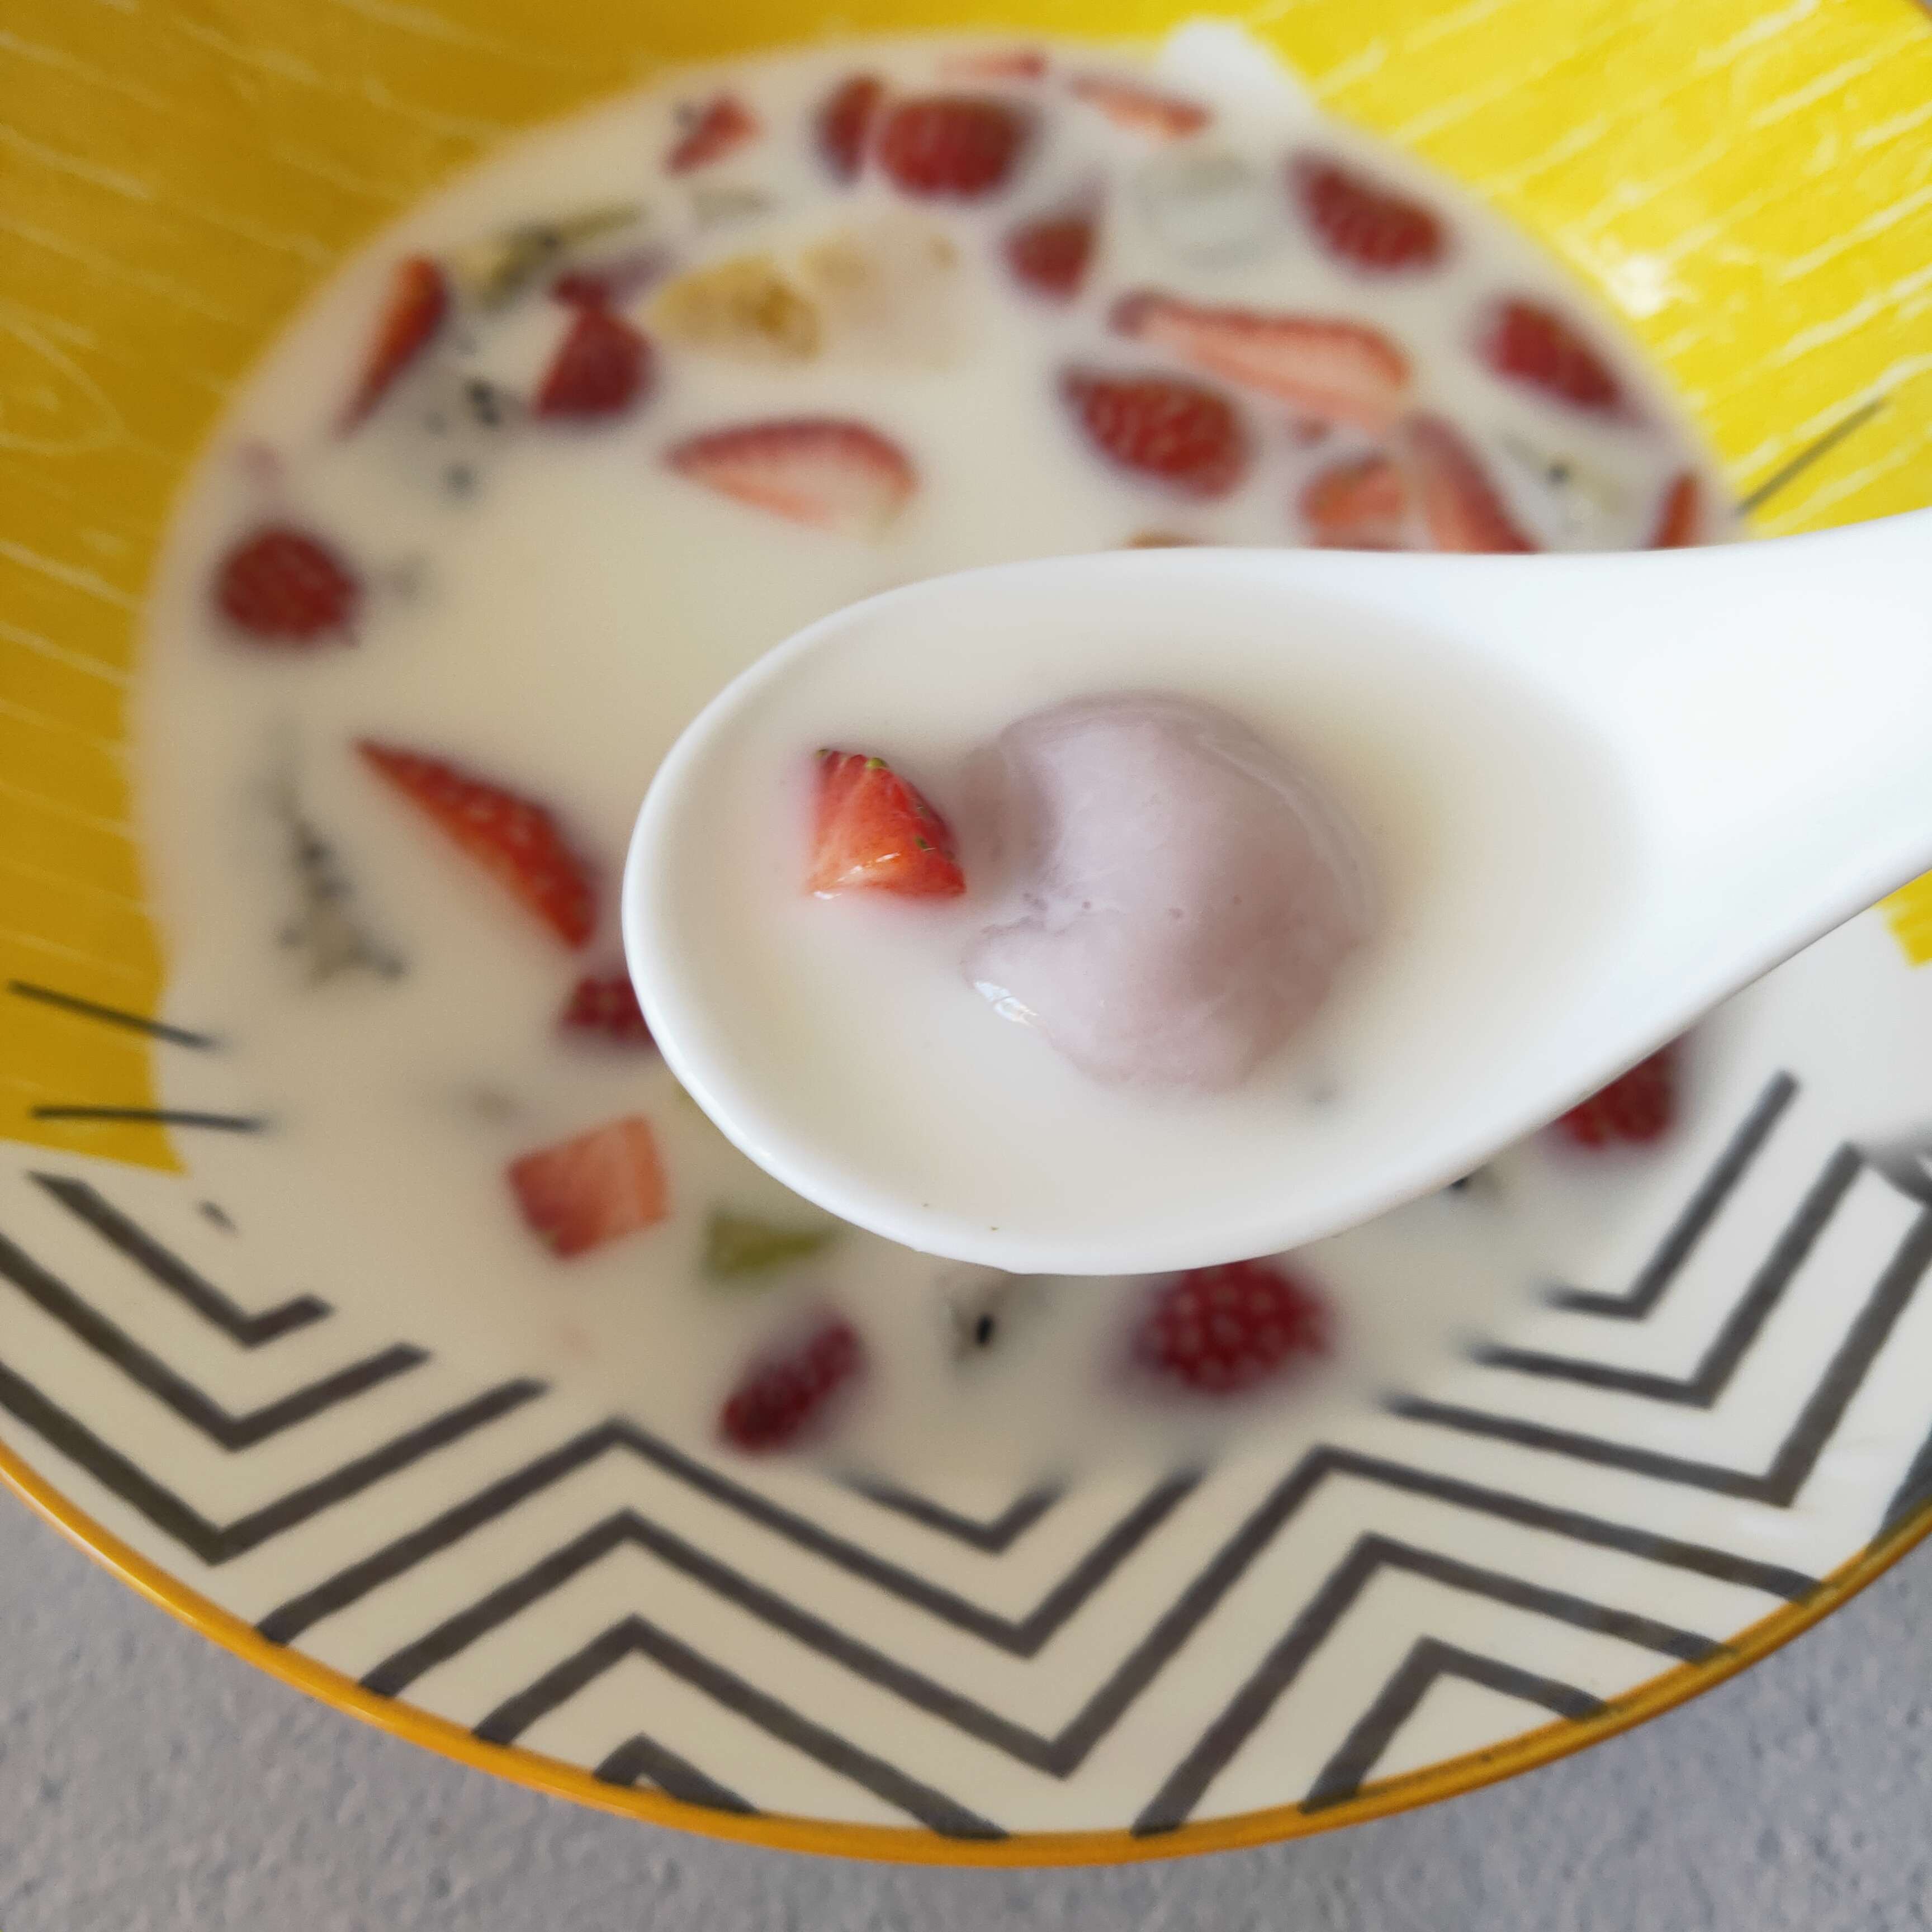 Yogurt and Fruit Gnocchi recipe